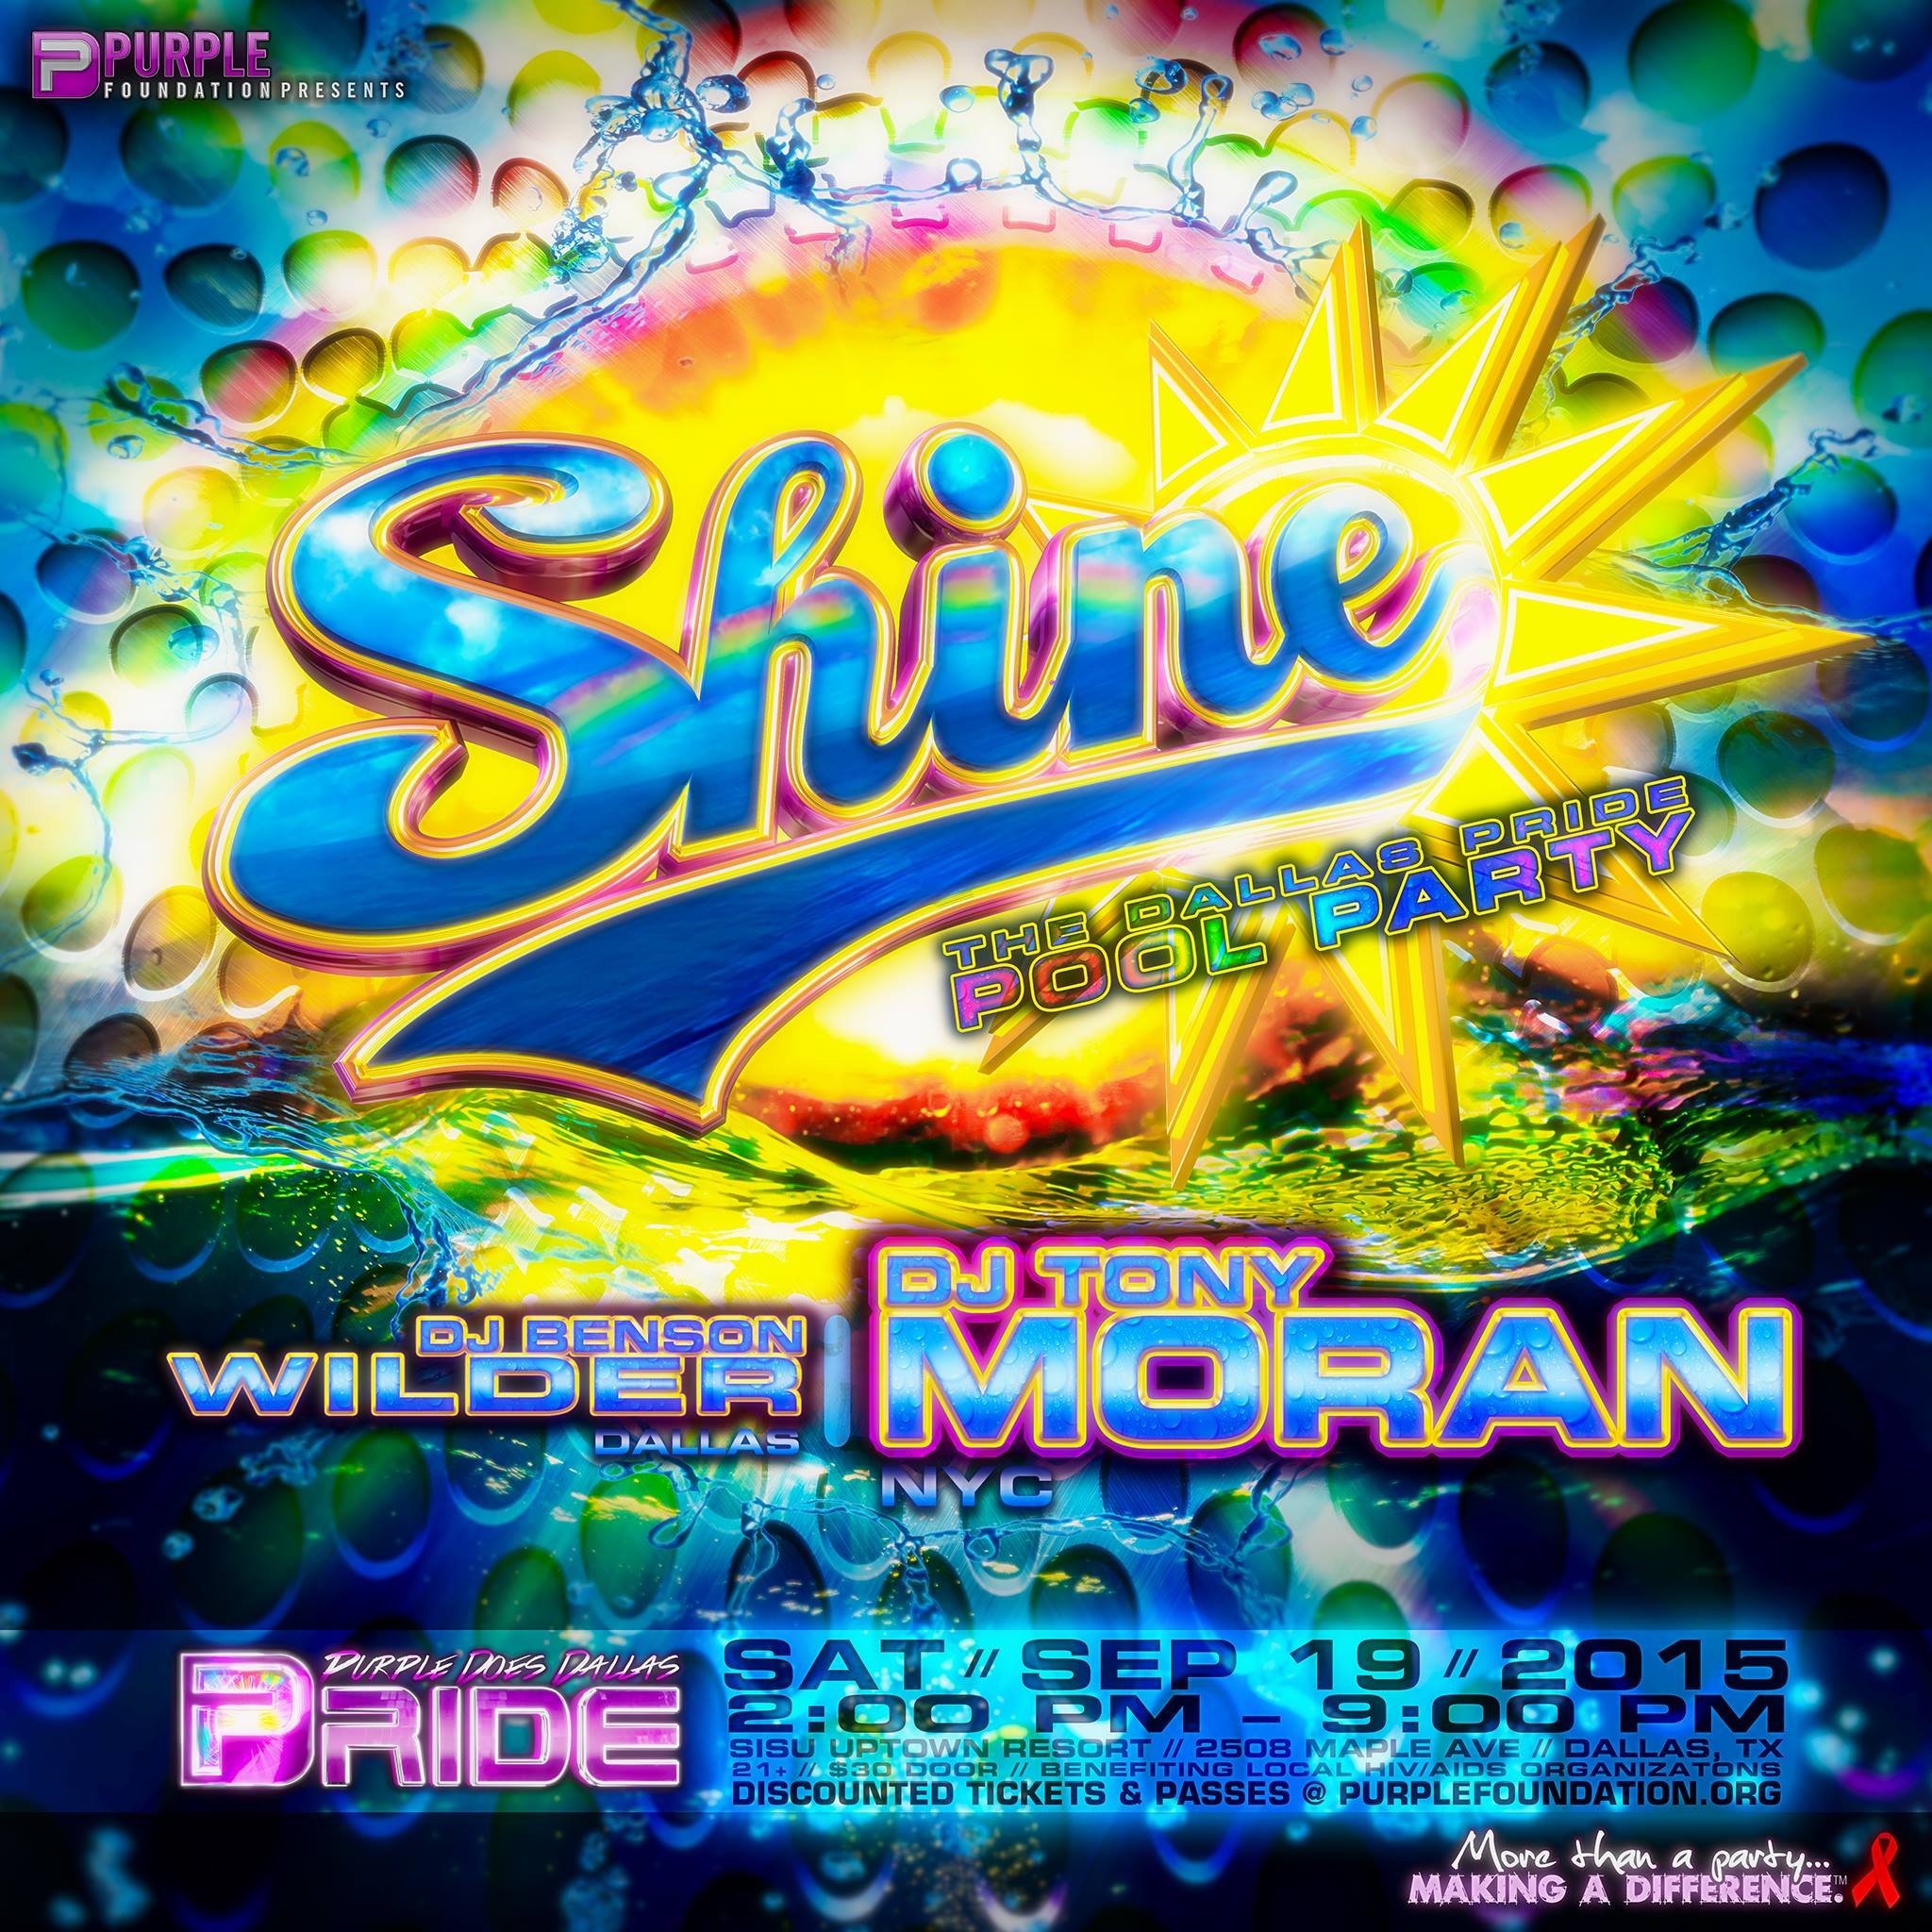 Shine (Live from SISU)